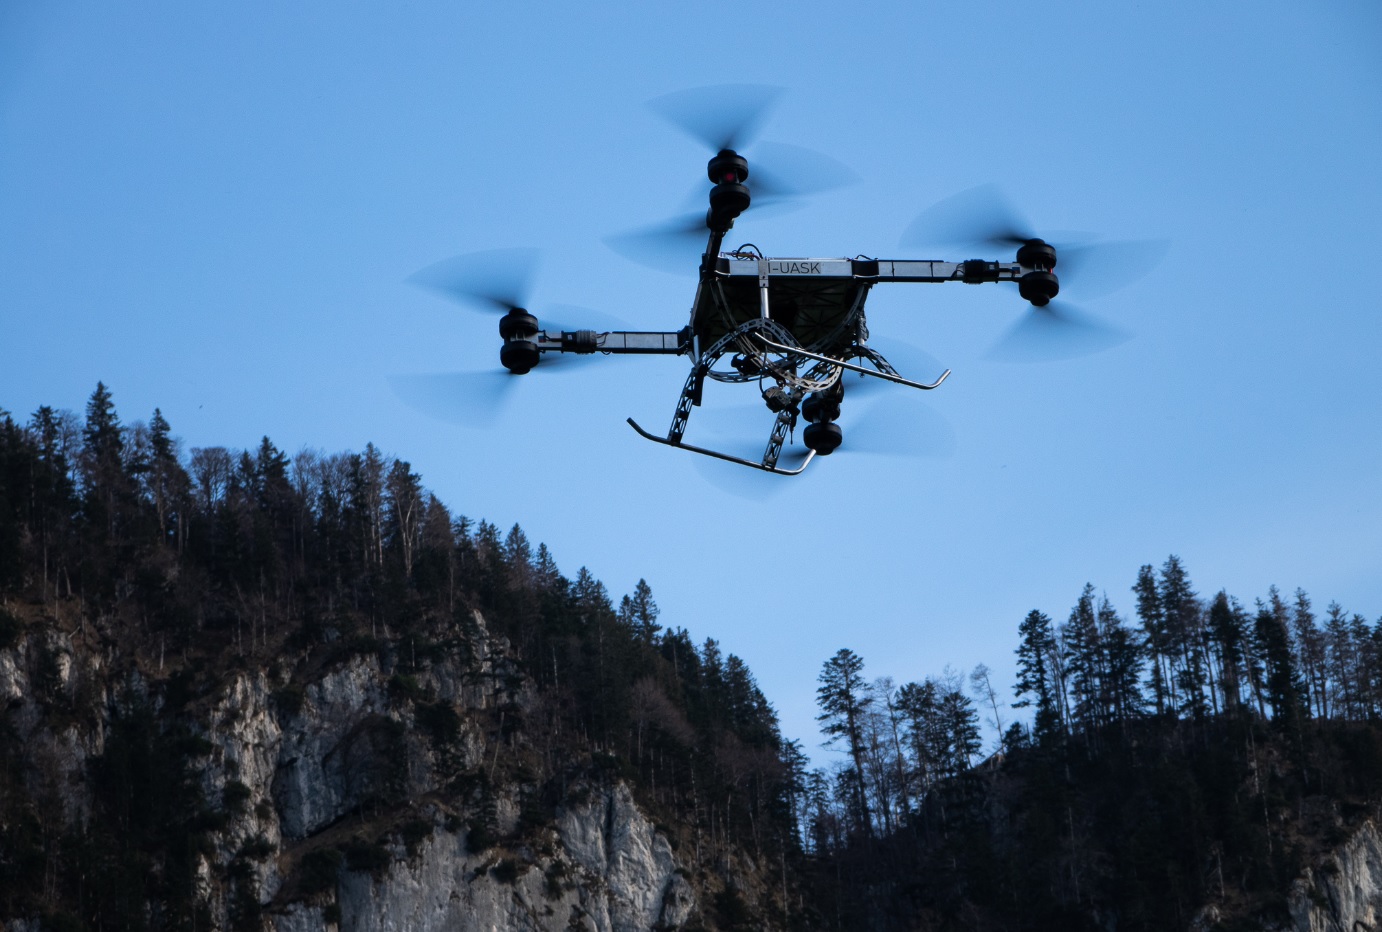 FlyingBasket heavy-lift drone